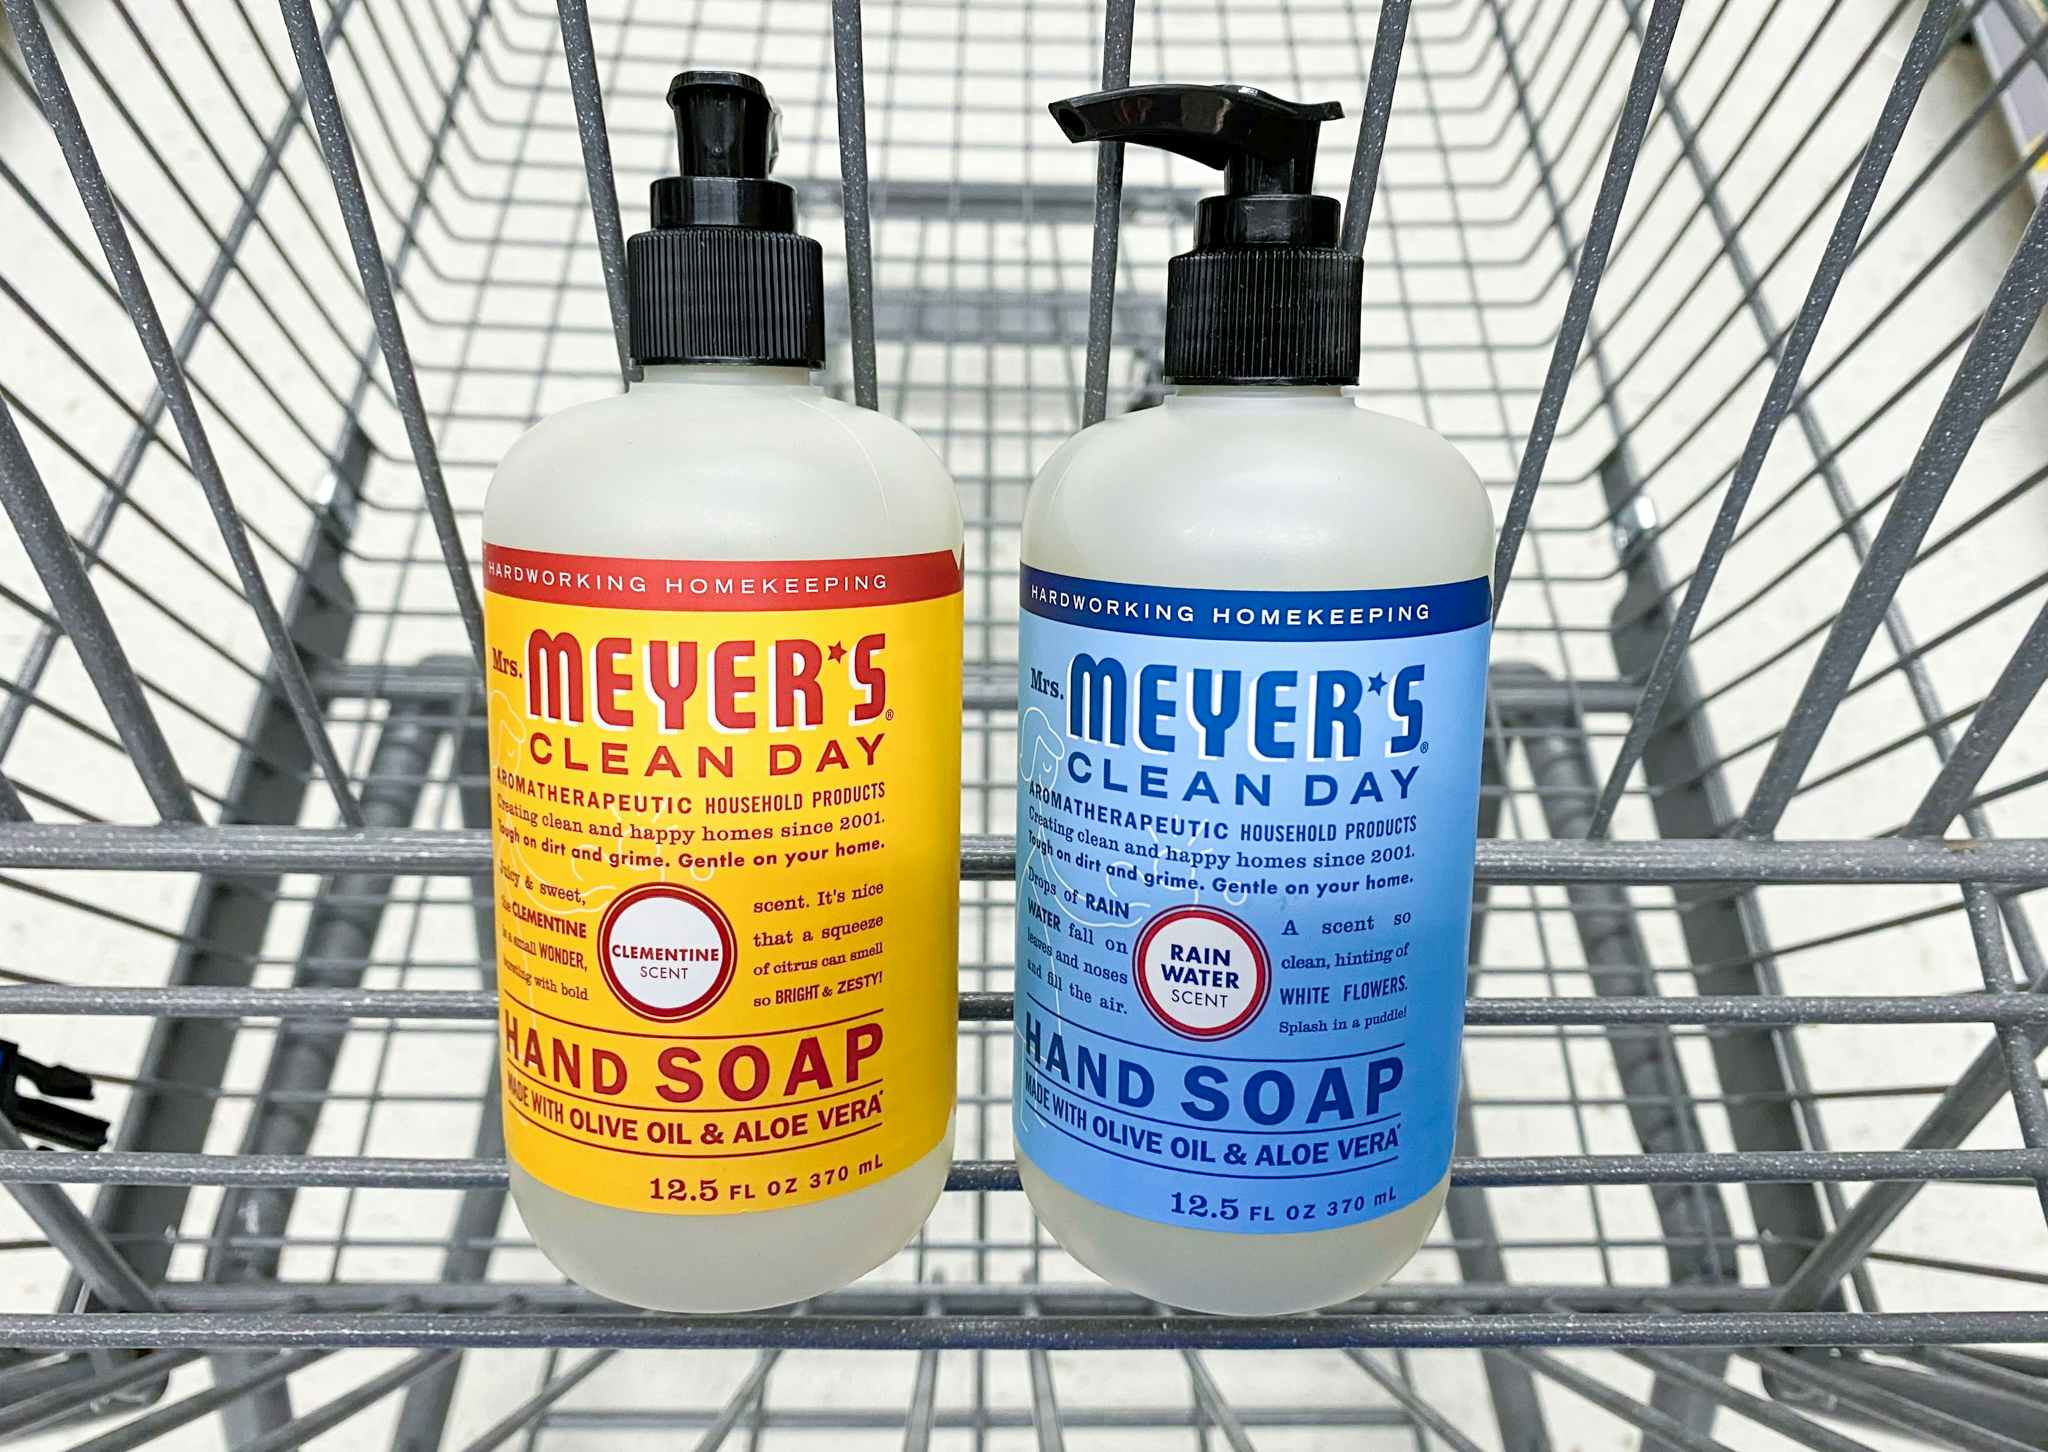 Mrs. Meyer's Hand Soap in Walmart shopping cart